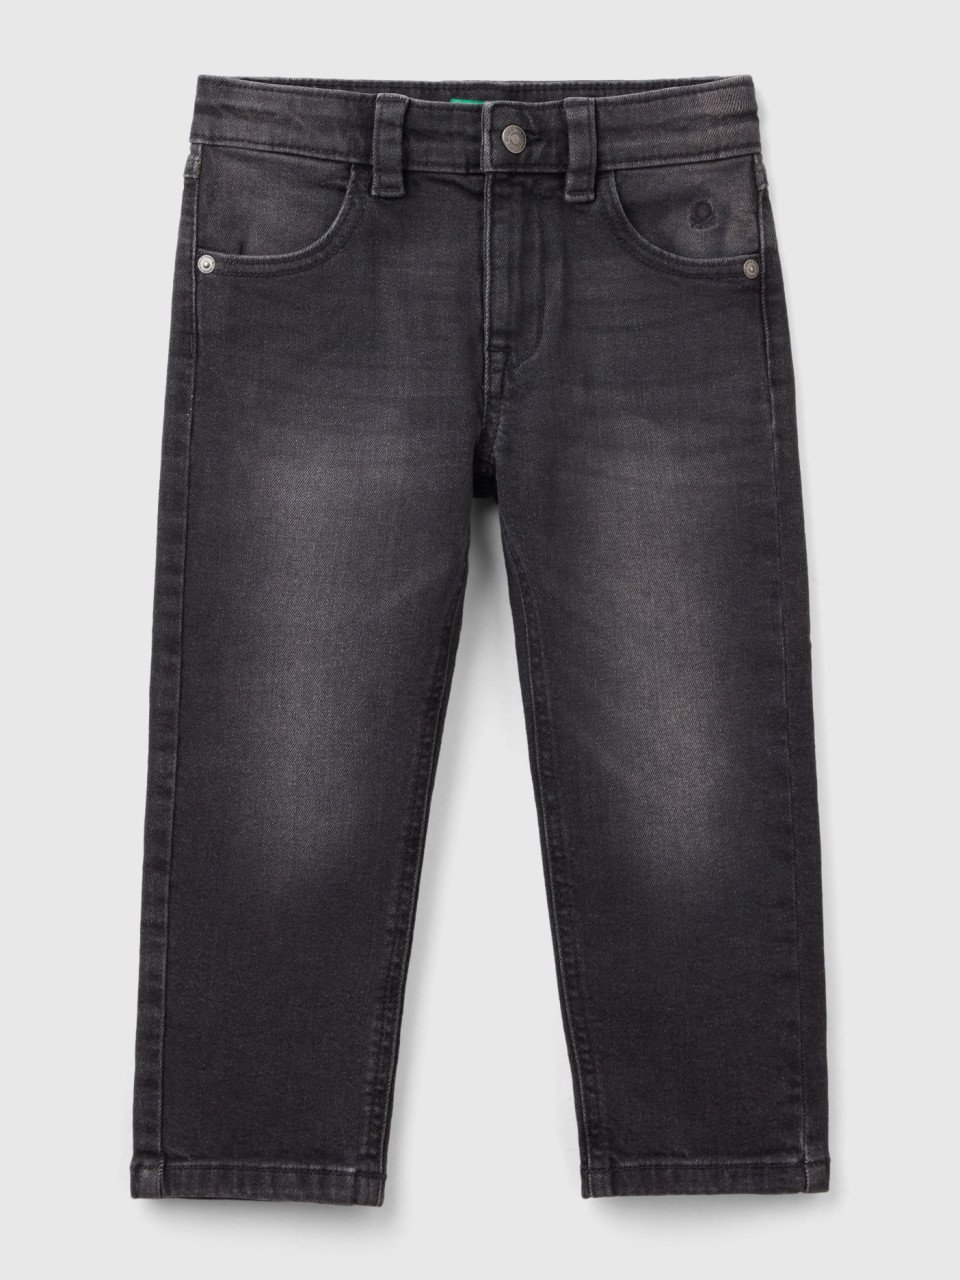 Benetton, 5-pocket-jeans 